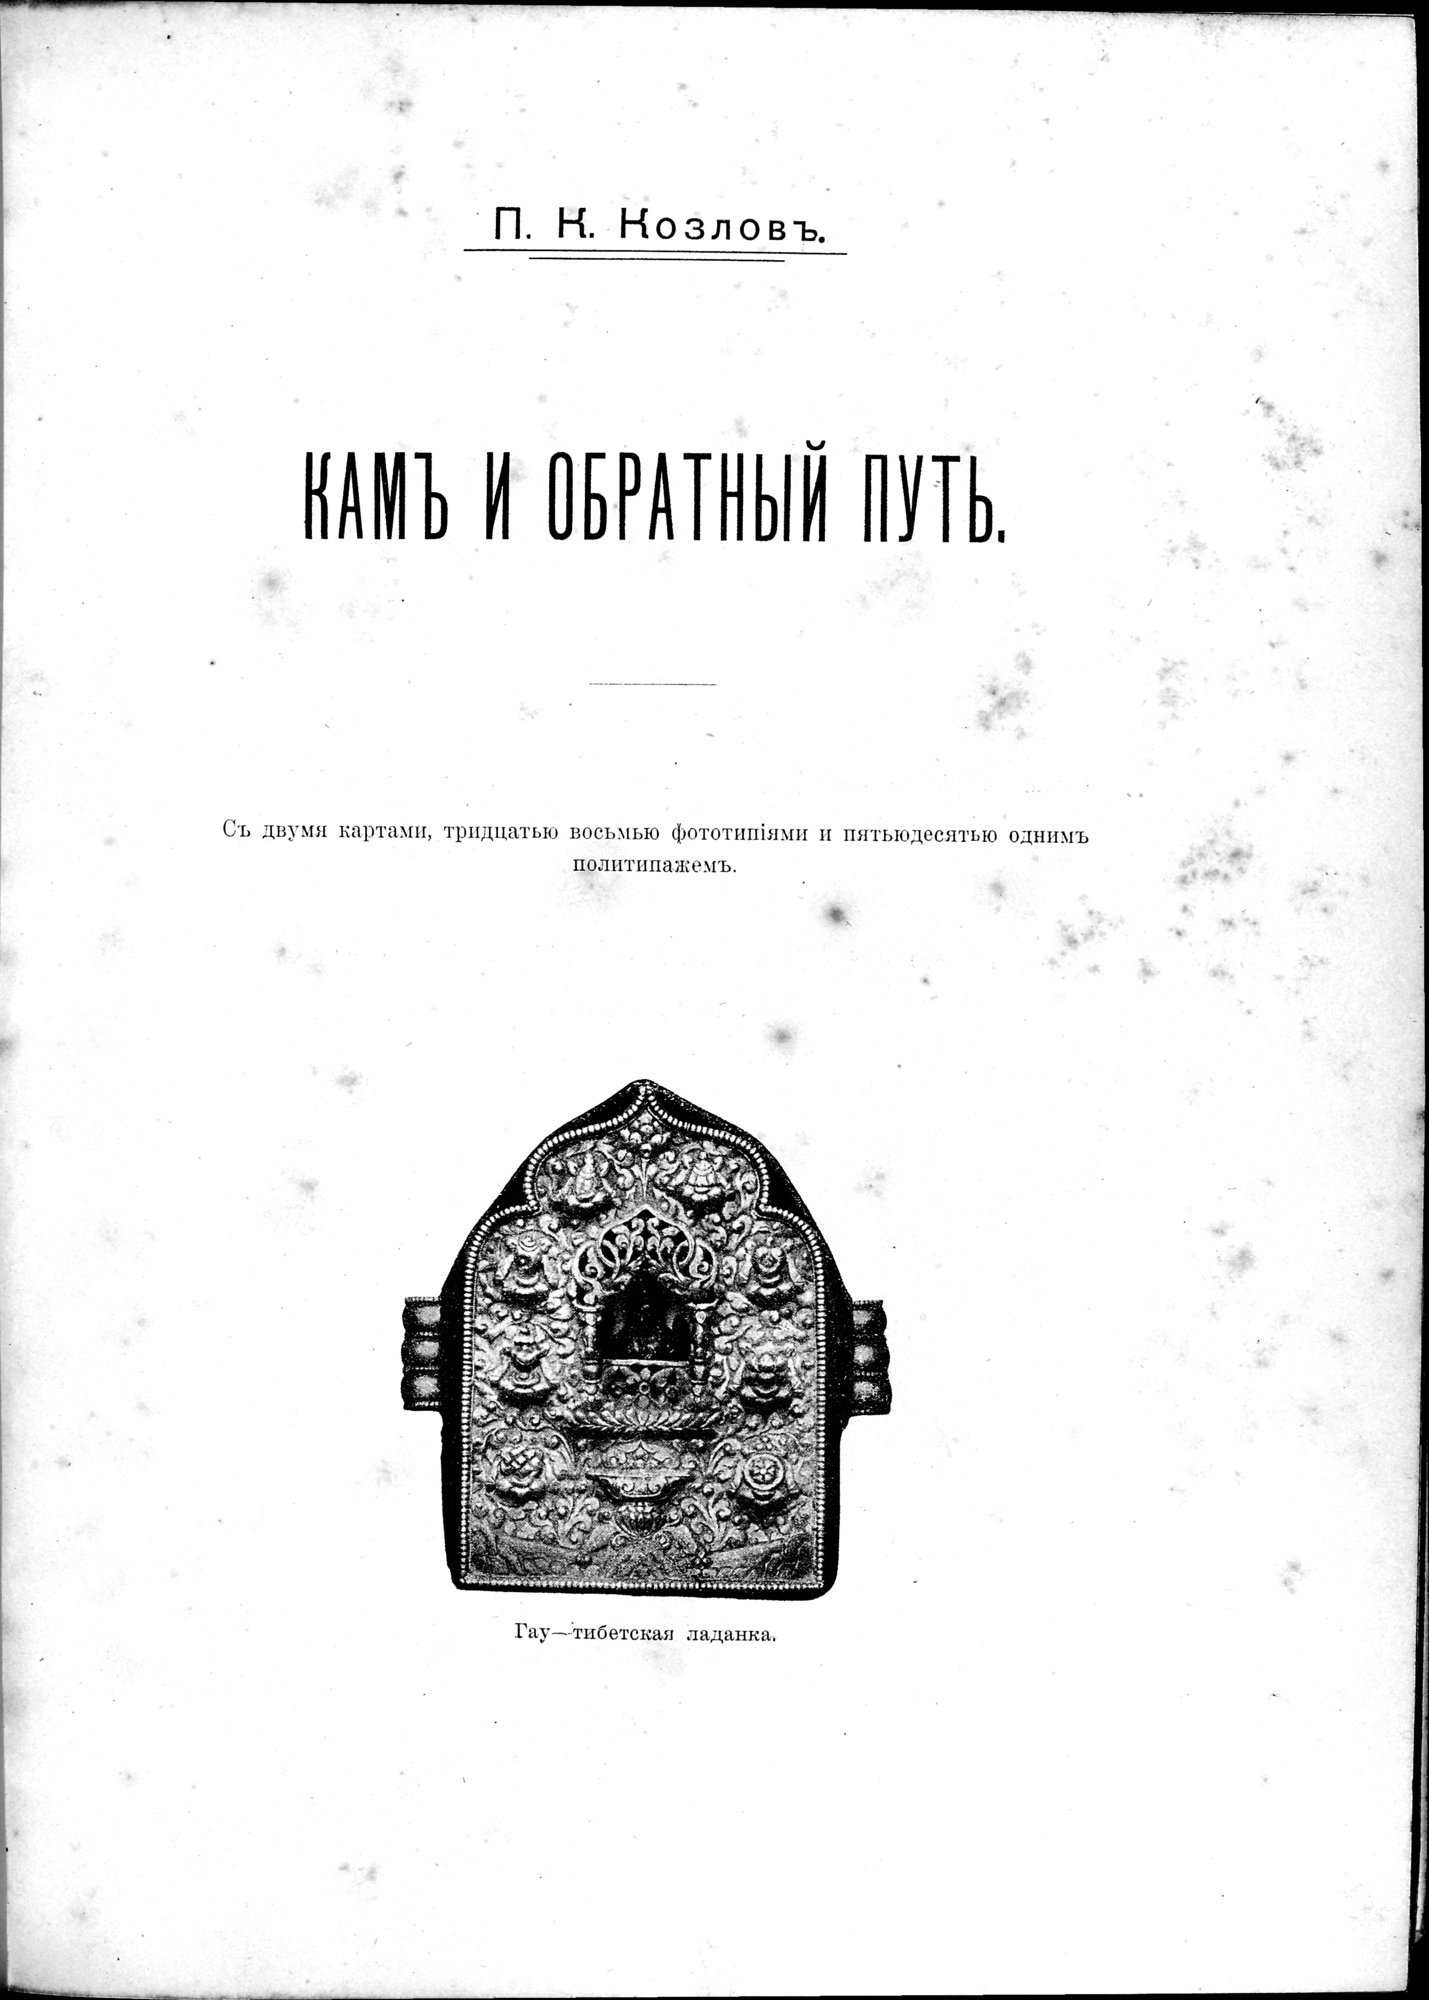 Mongoliia i Kam : vol.2 / Page 11 (Grayscale High Resolution Image)